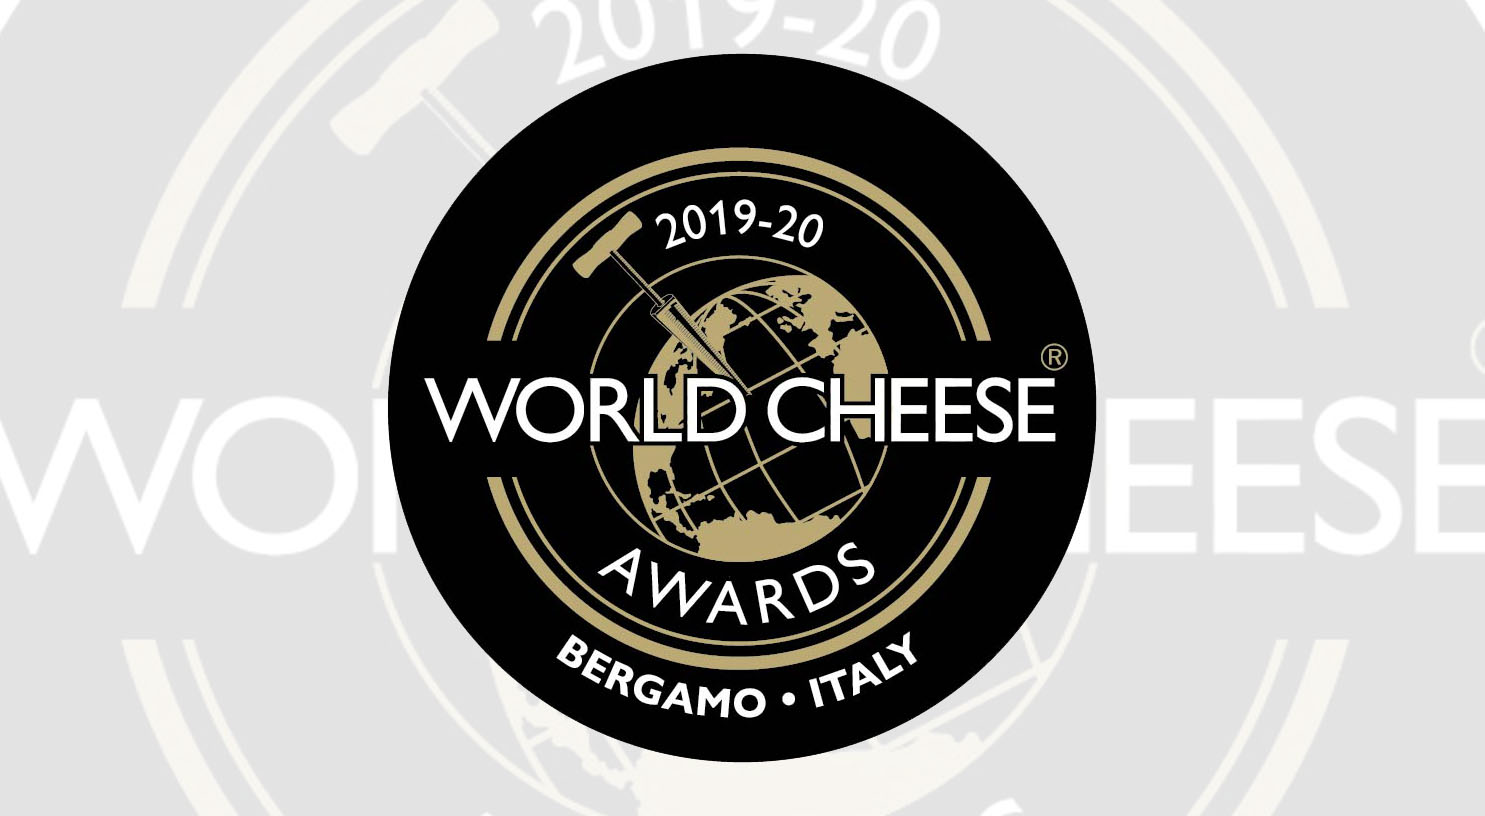 World Cheese Award a Bergamo